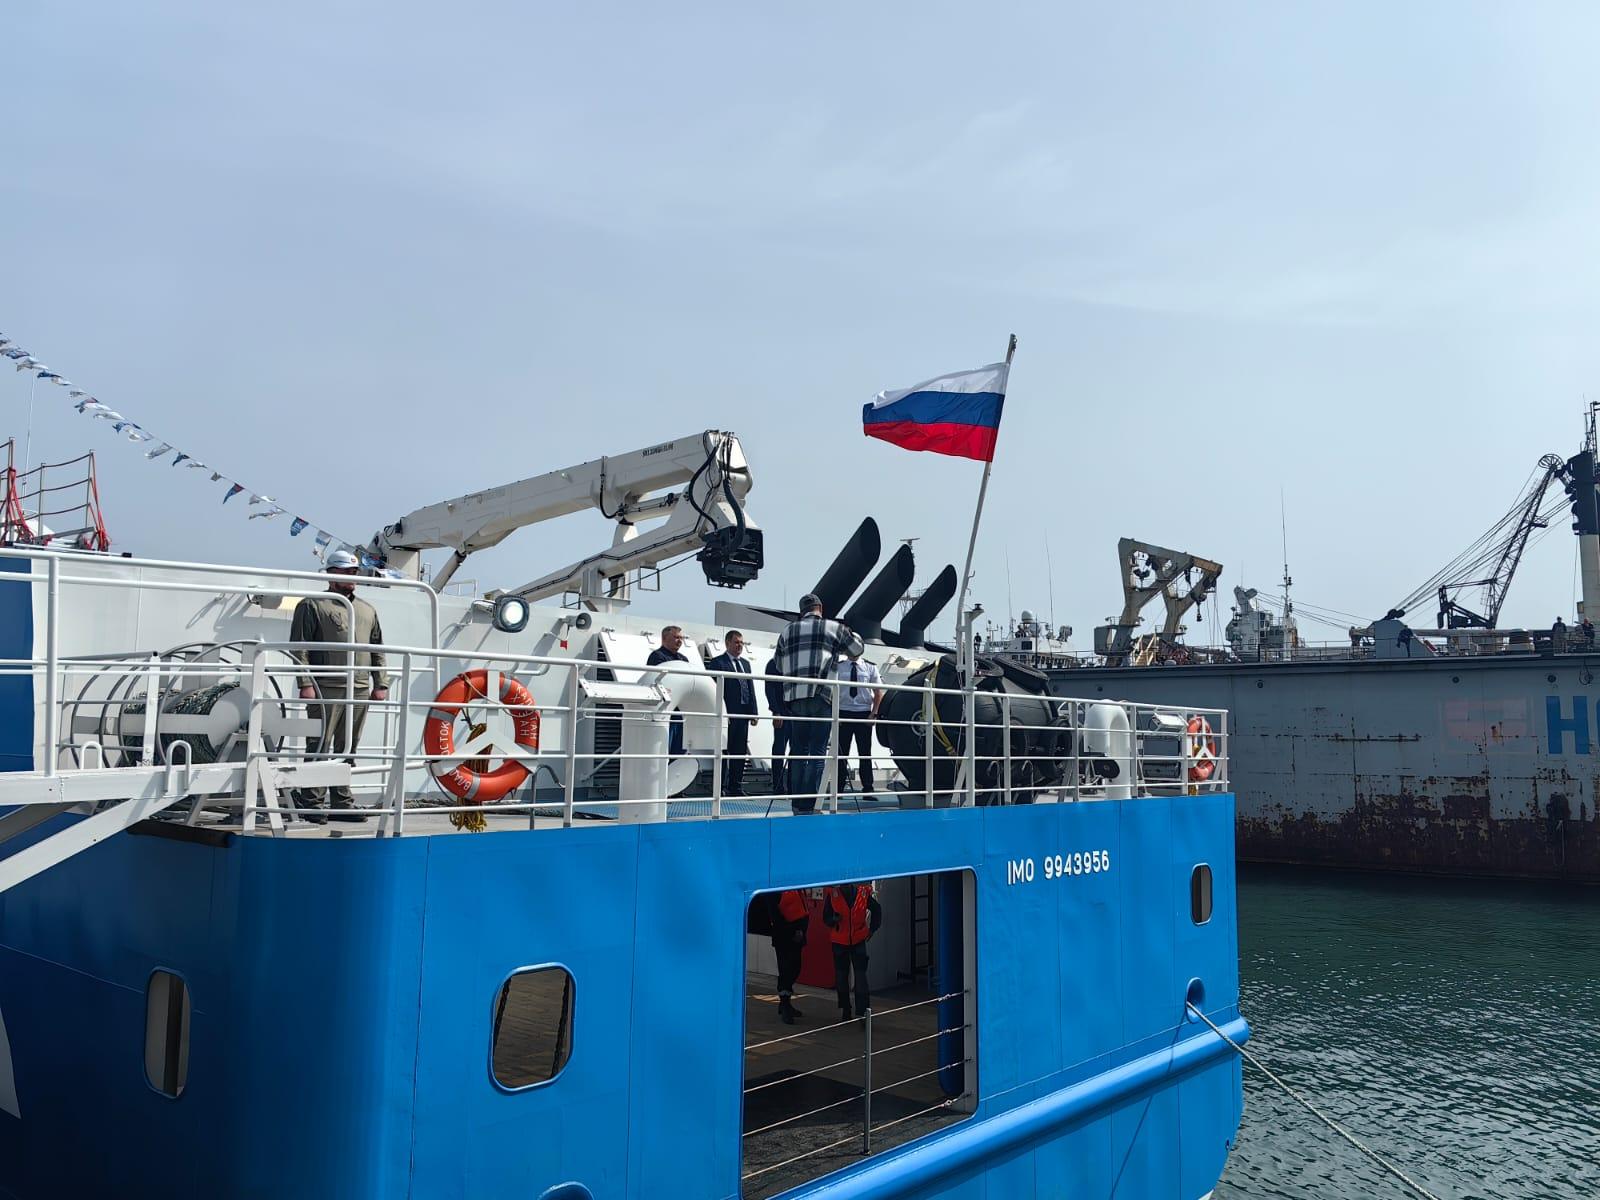 На новом краболове «Капитан Хазан» прошла церемония подъёма флага Российской Федерации